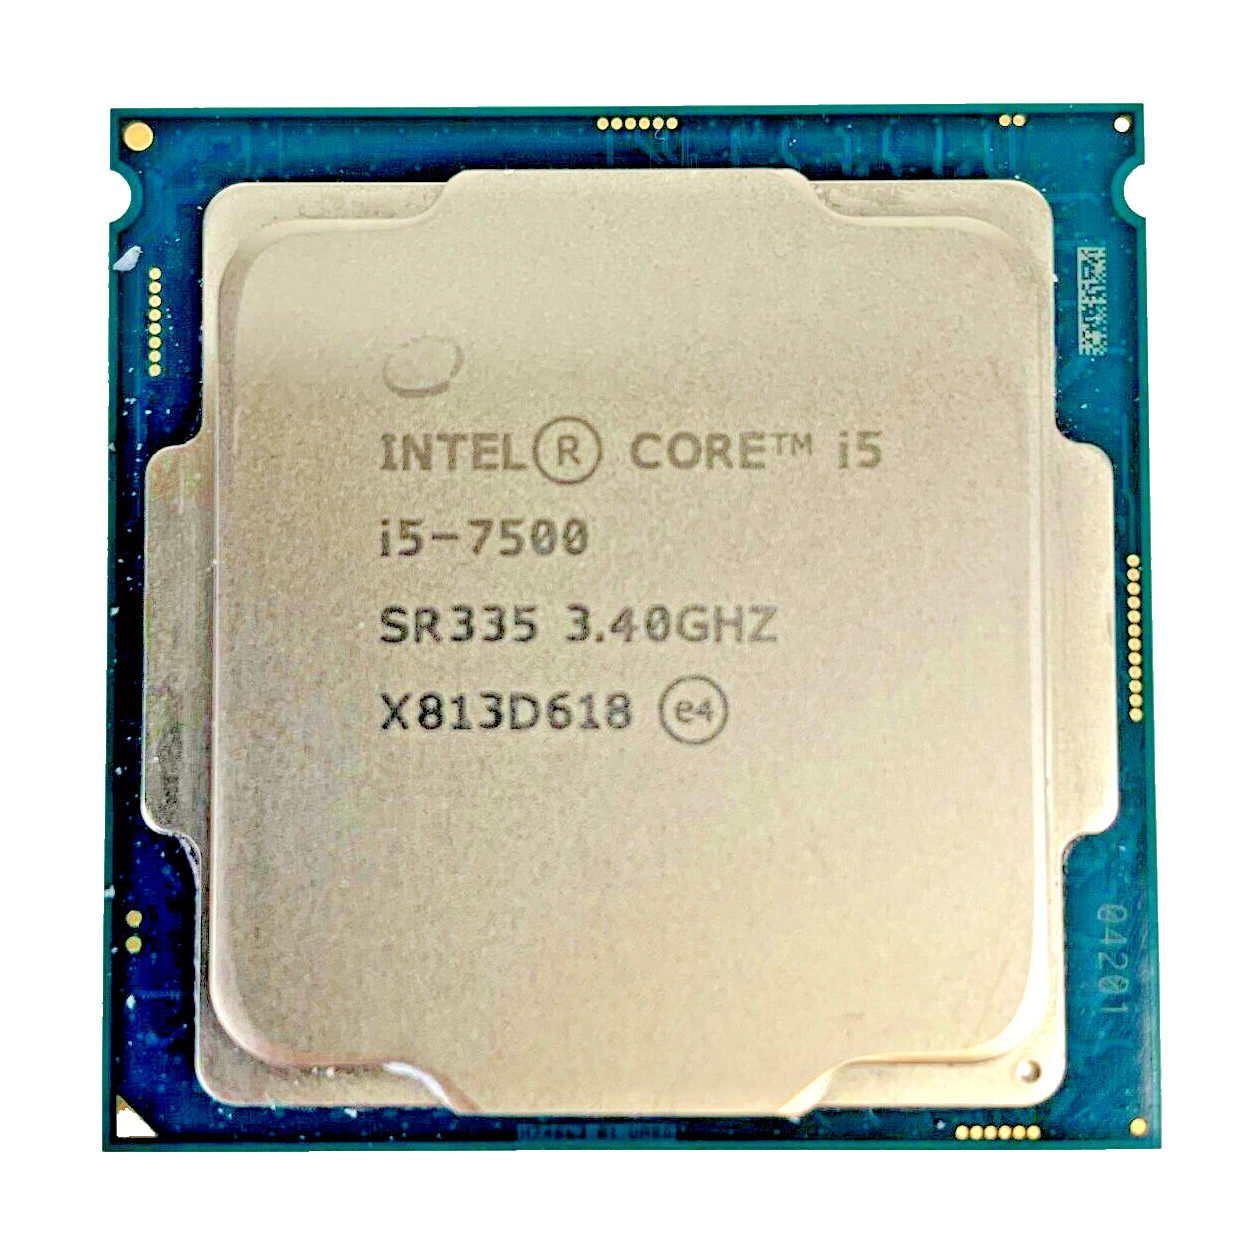 Intel Core i5-7500 3.40GHz 6MB Cache 8 GT/s SR335 CPU Processor